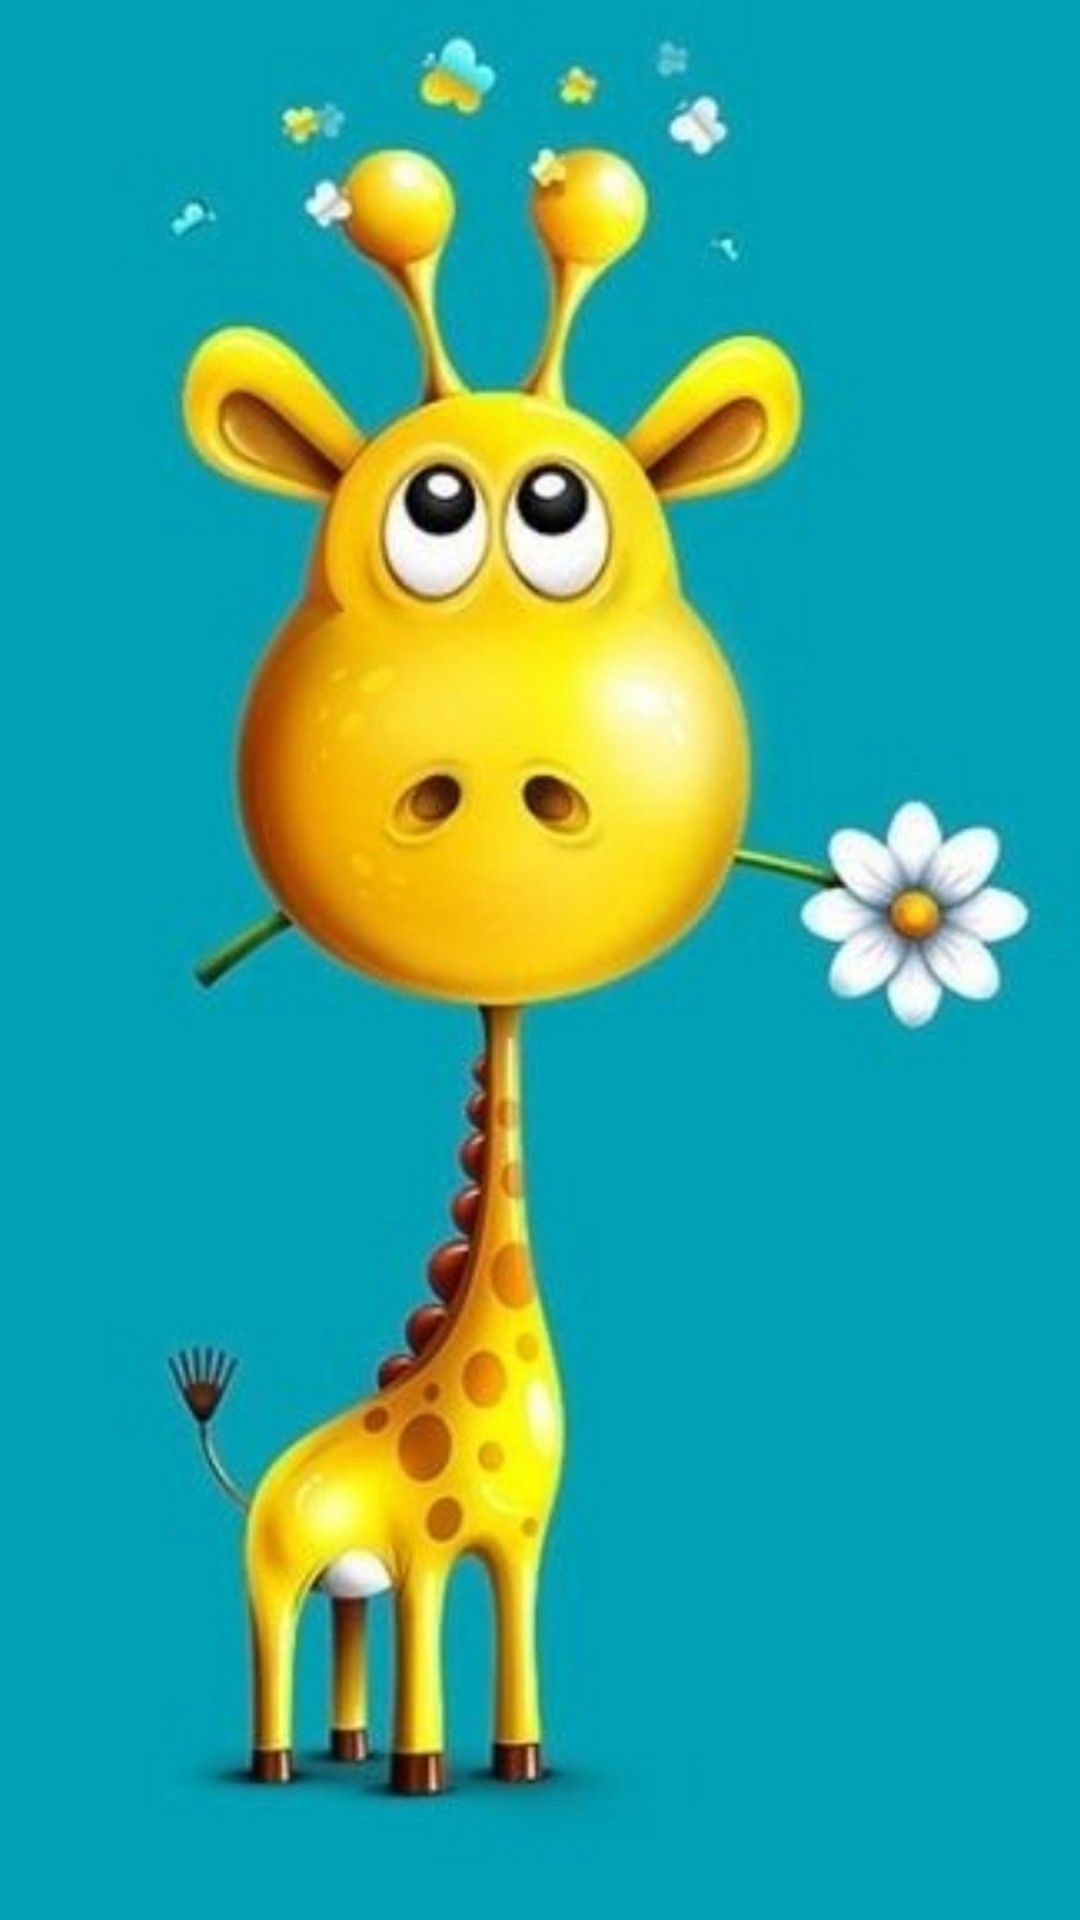 Animated Giraffe Wallpaper iPhone Cute Wallpaper